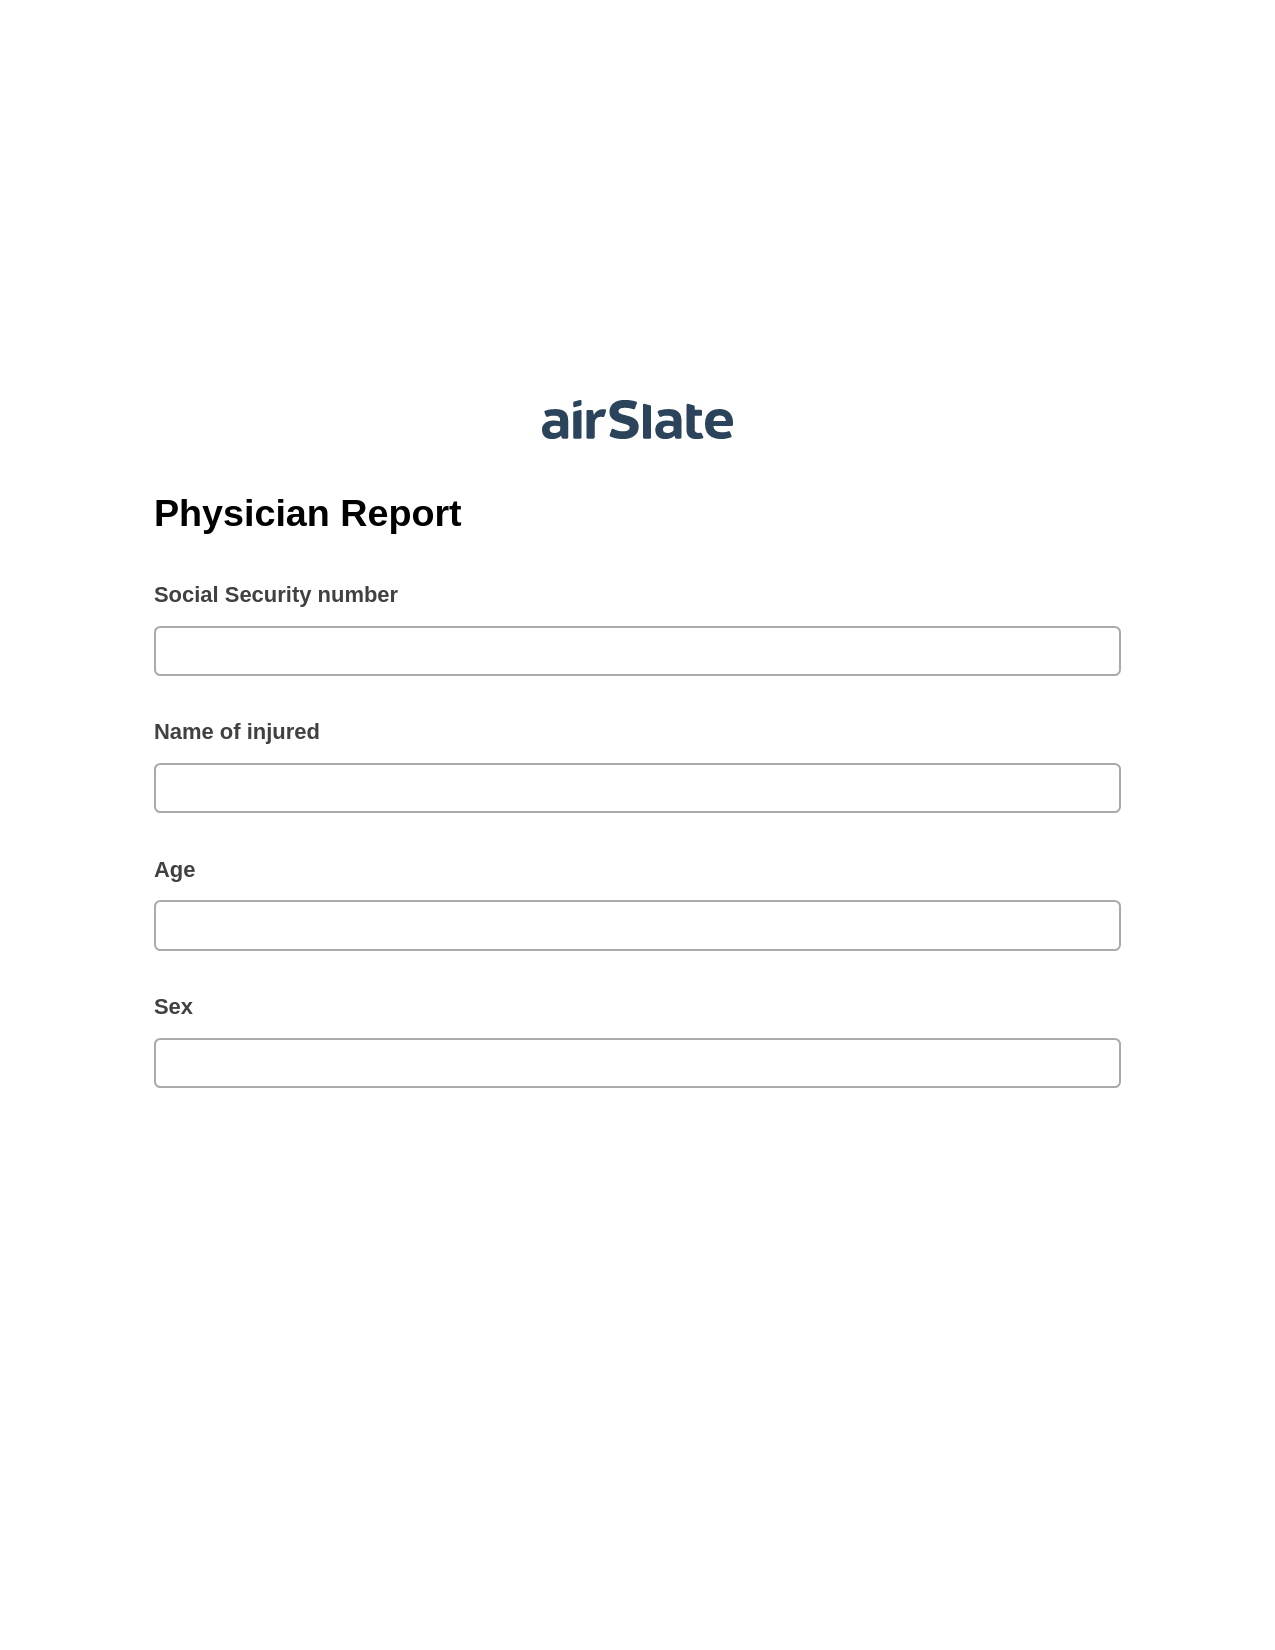 Multirole Physician Report Pre-fill from CSV File Bot, Update MS Dynamics 365 Record Bot, Slack Notification Postfinish Bot